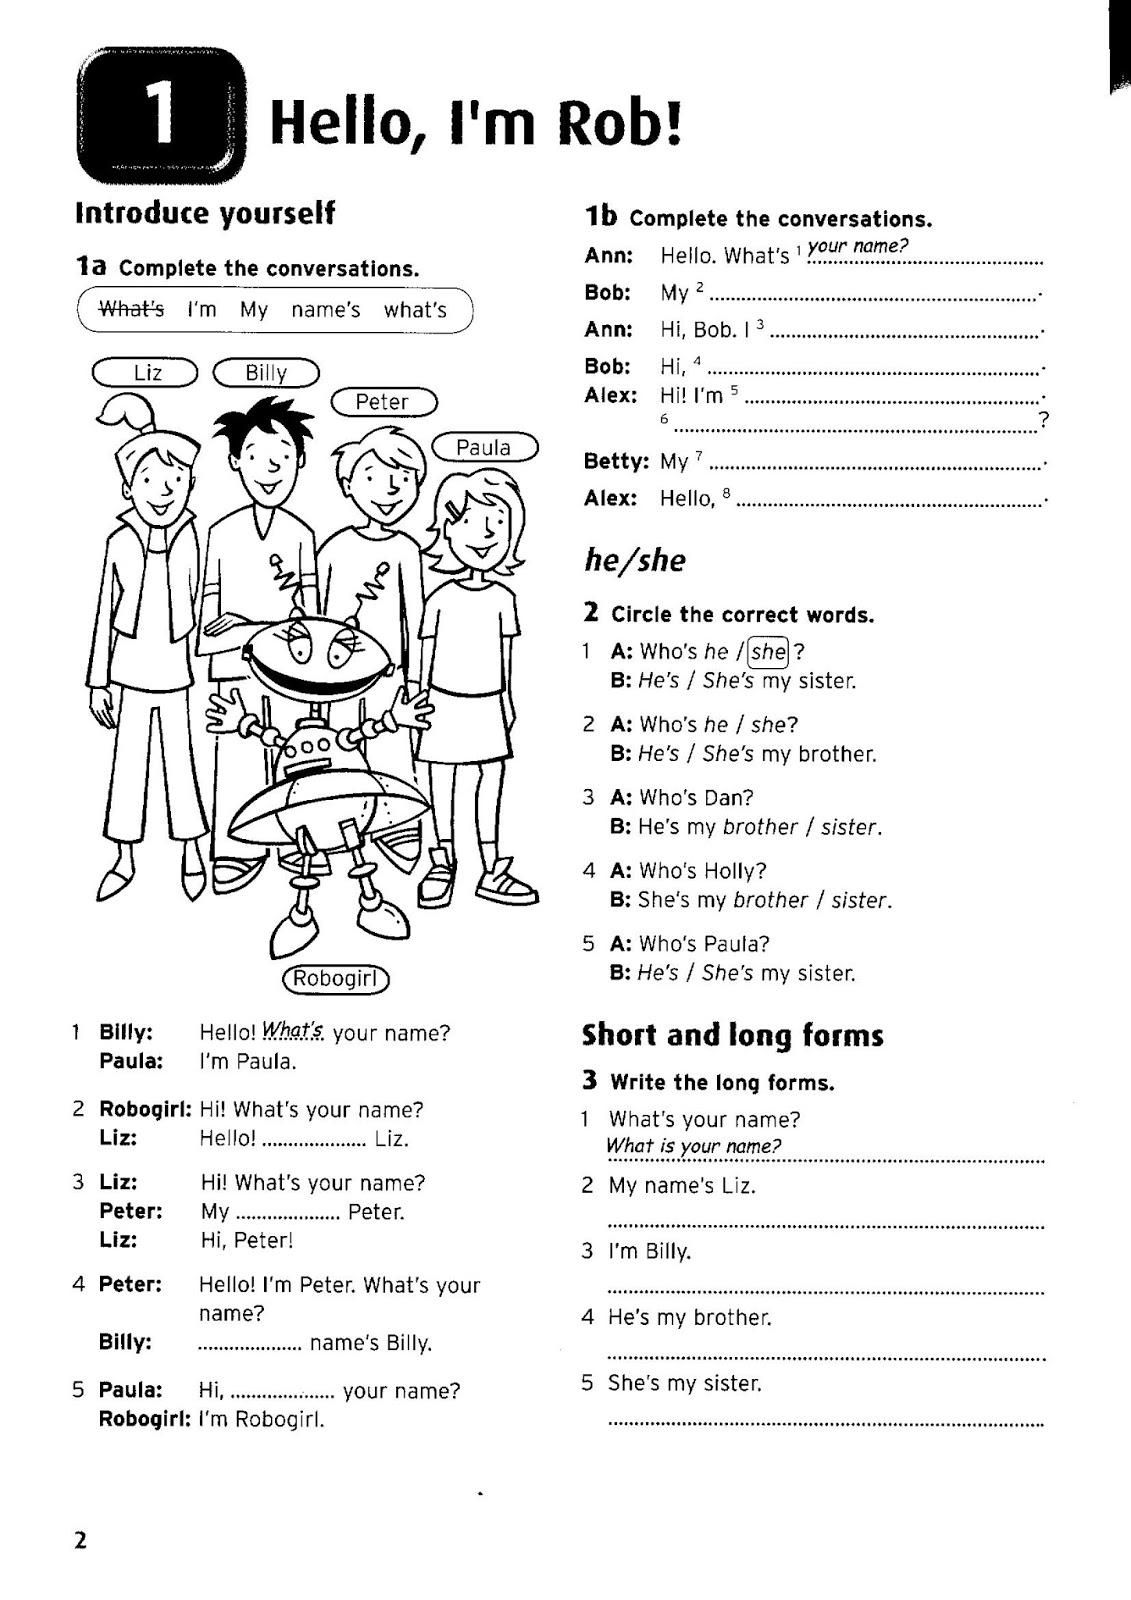 12-best-images-of-printable-spanish-greetings-worksheets-words-worksheets-english-greeting